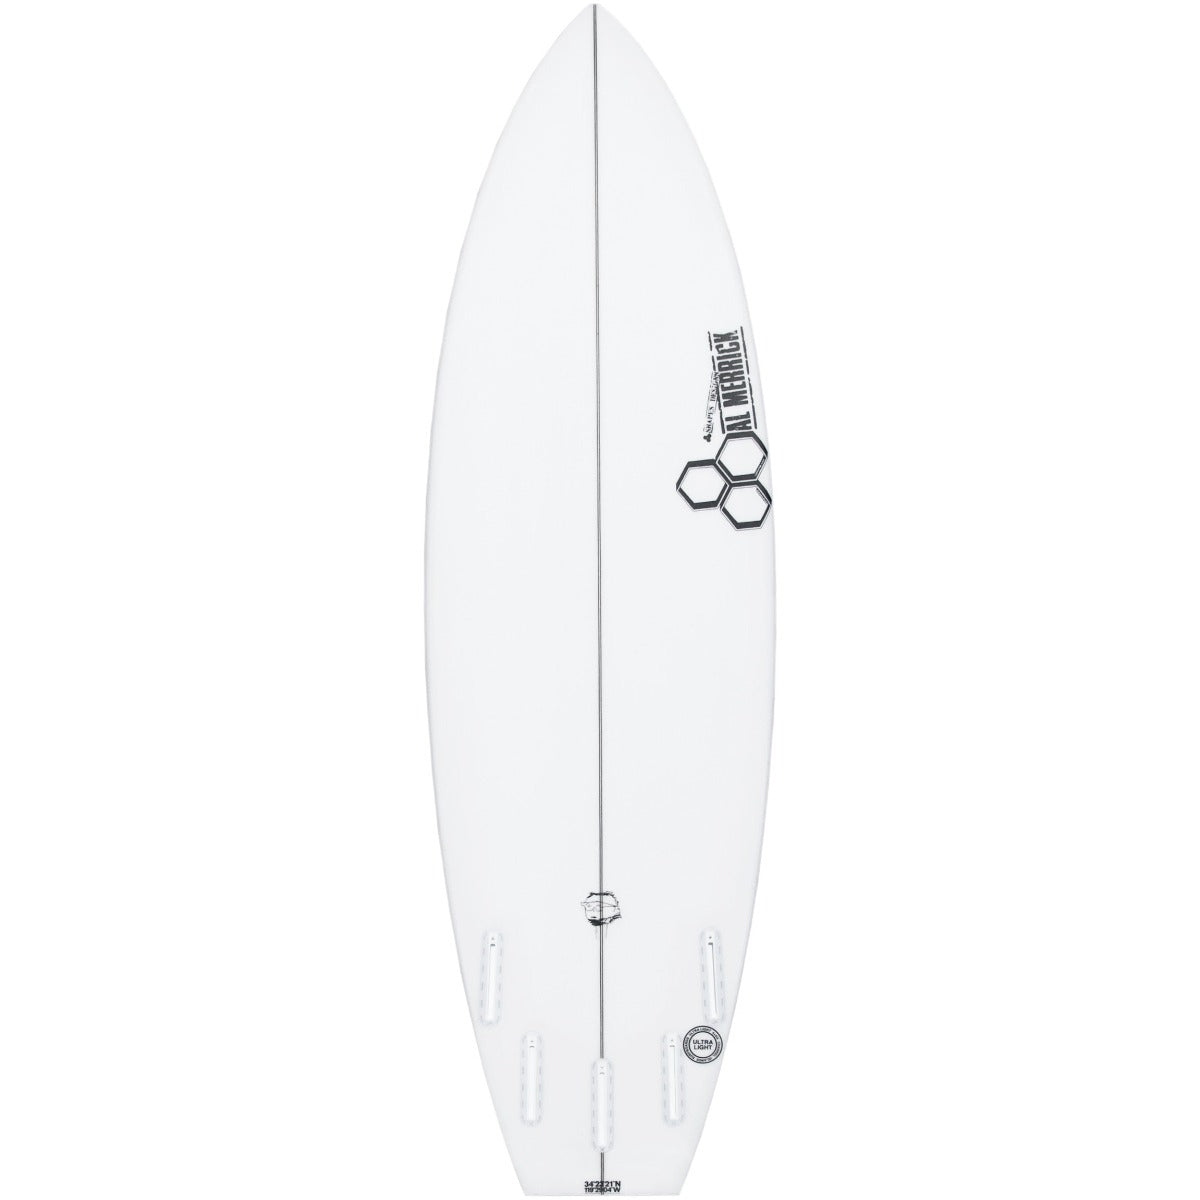 channel-islands-surfboards-neckbeard2-surfboard-al-merrick-high-performance-galway-ireland-blacksheepsurfco-bottom